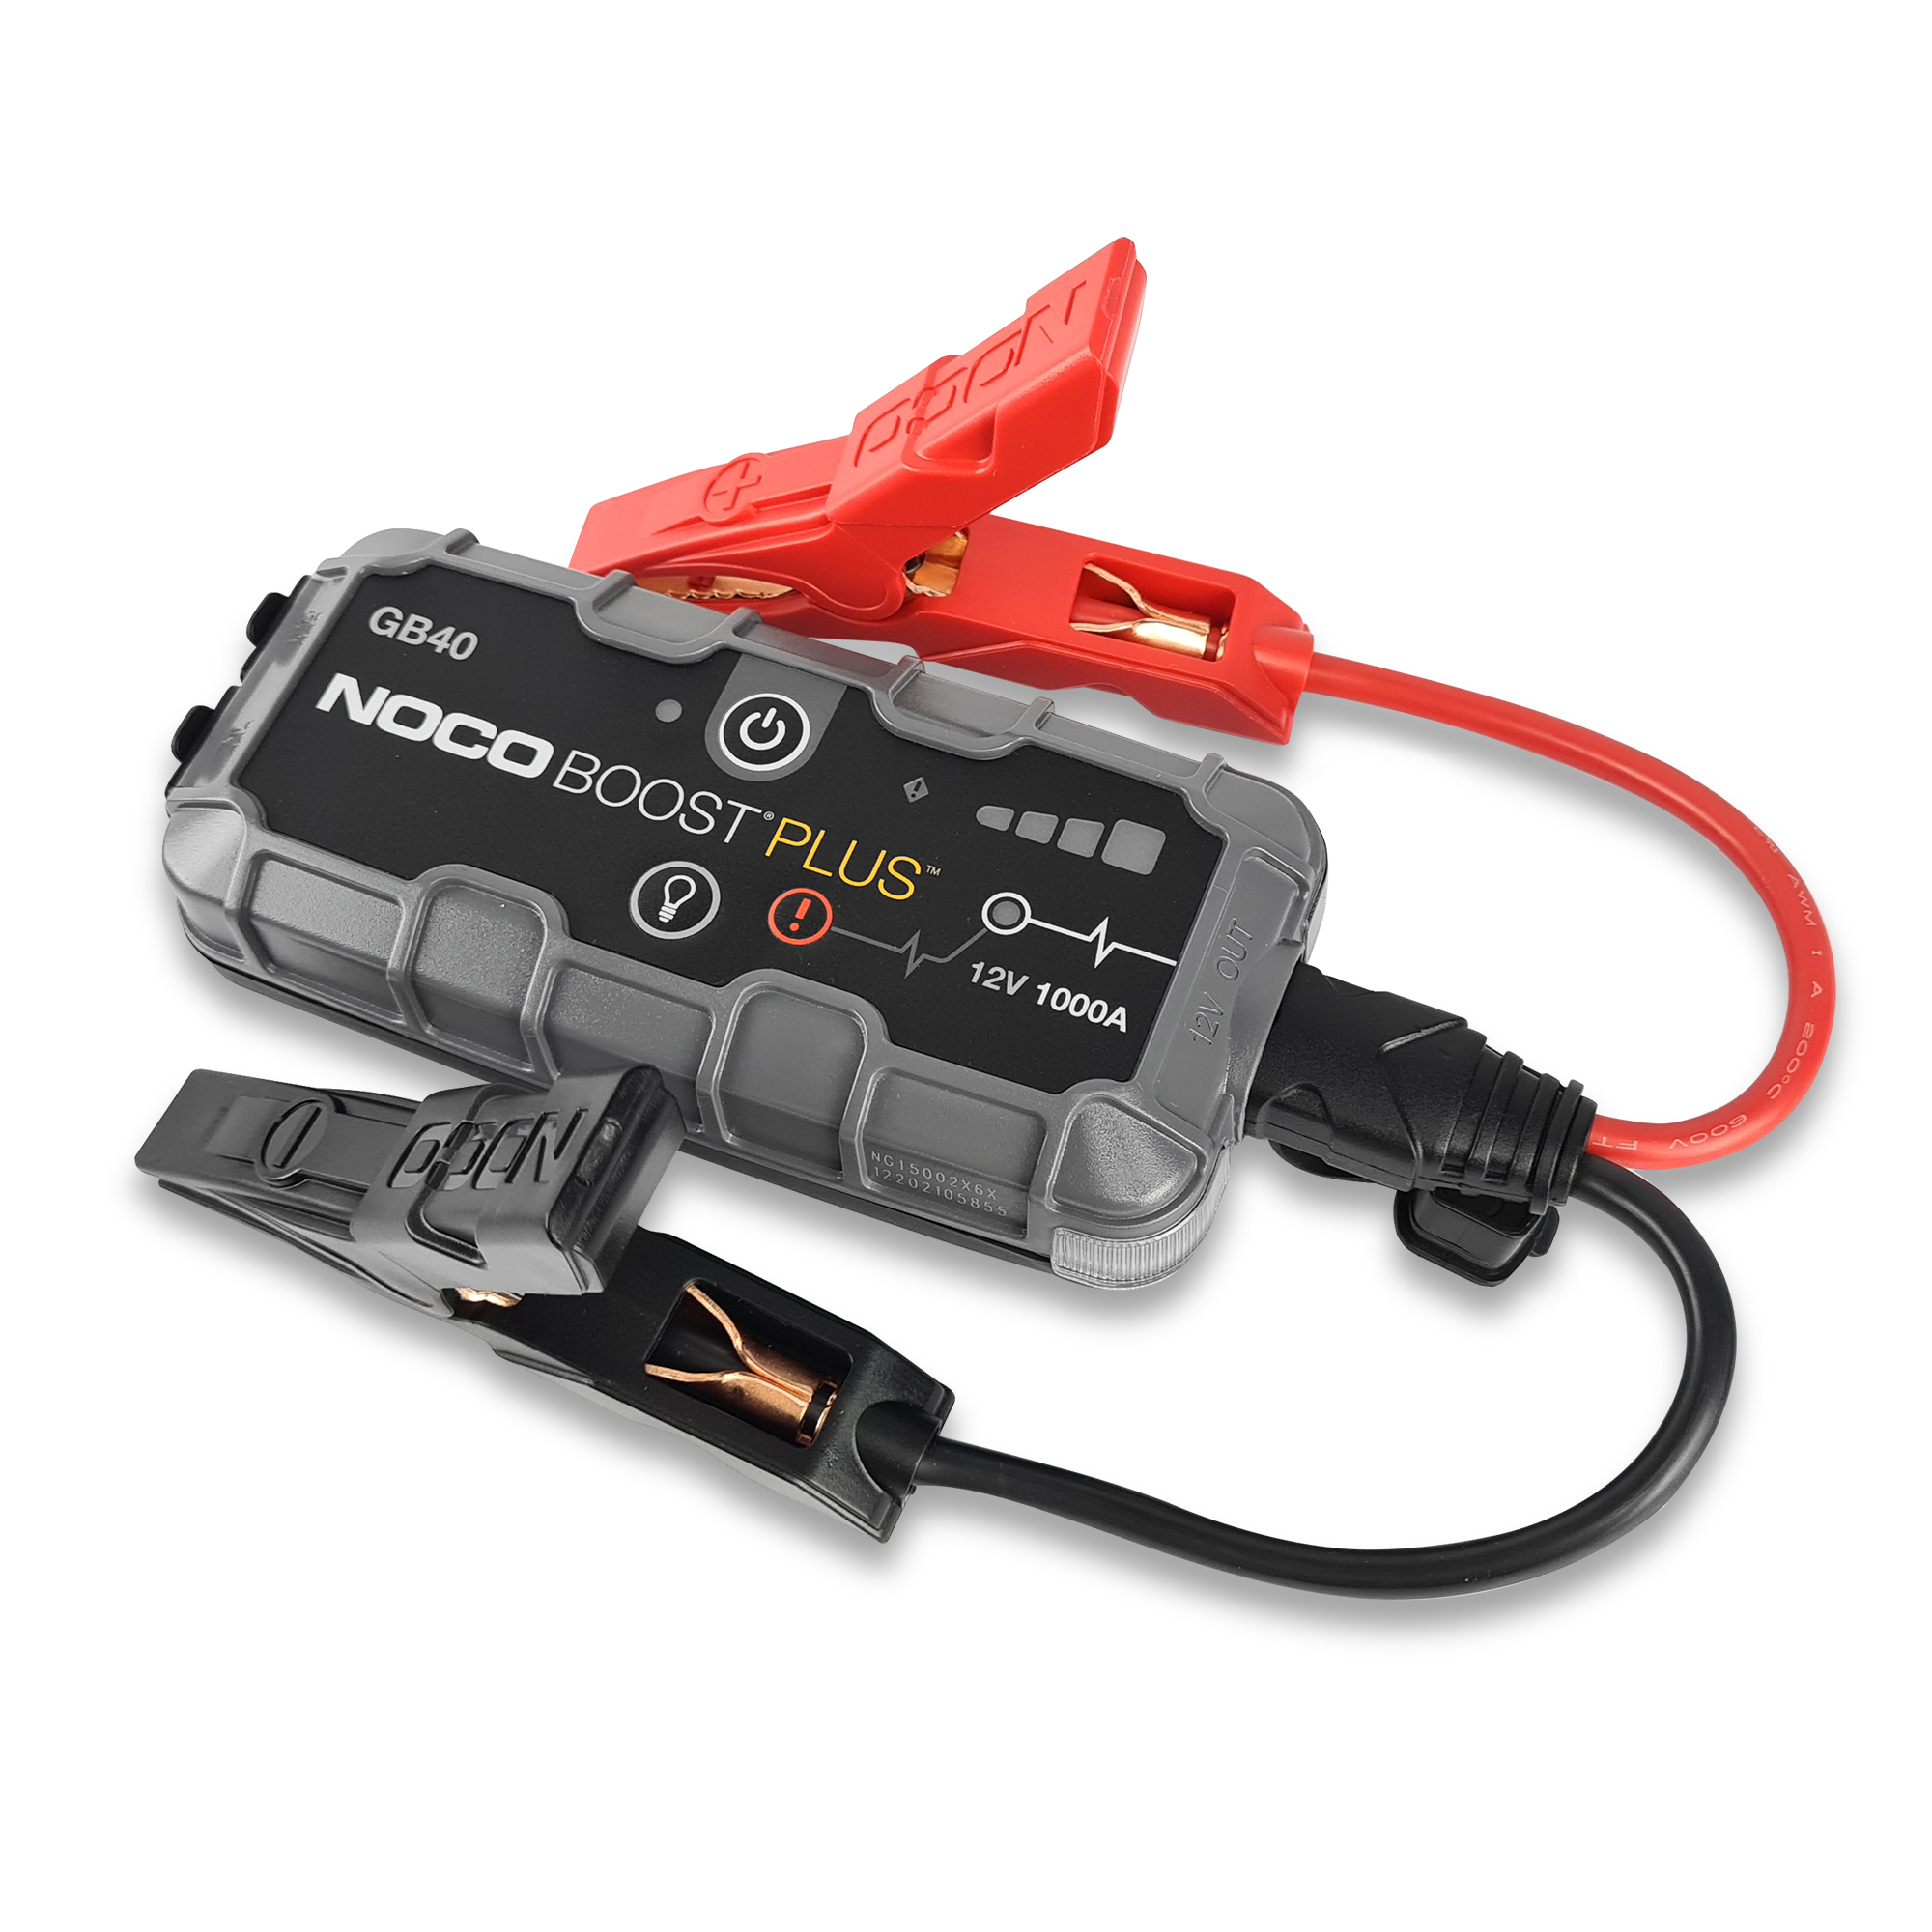 NOCO Plus GB40 1000A Lithium Jump Starter / Powerbank :: £118.75